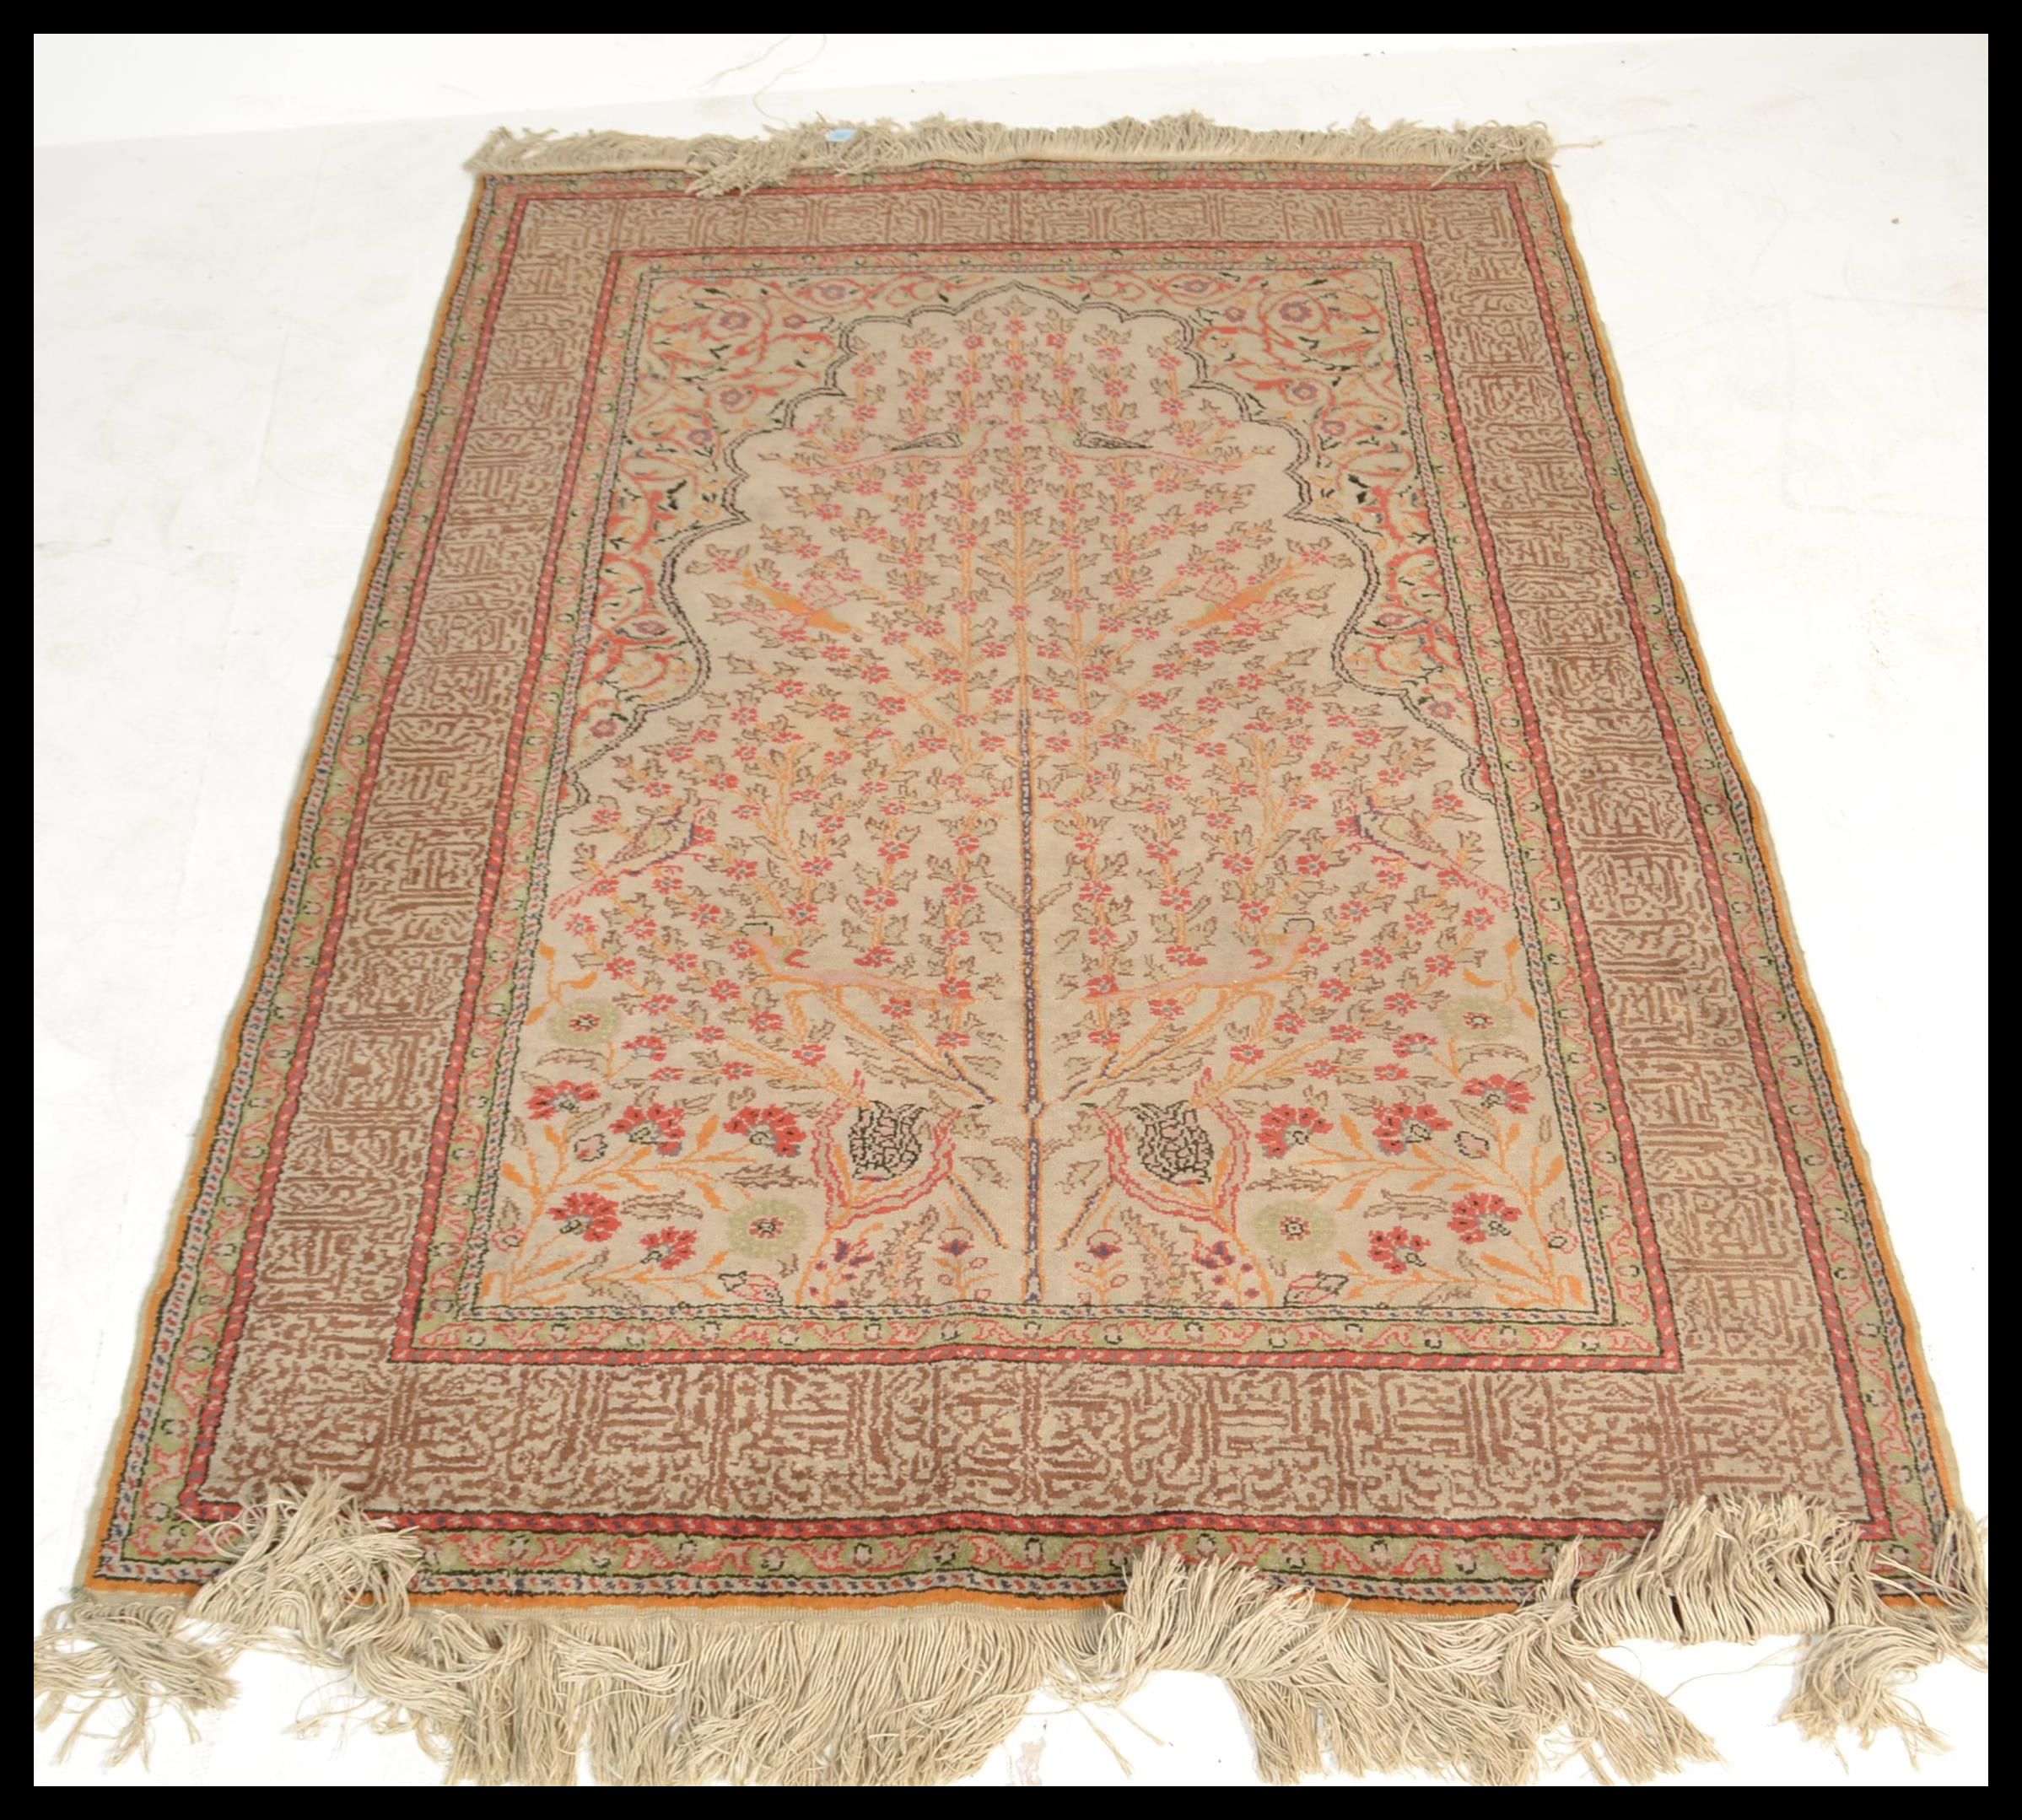 A 20th century Turkish Islamic carpet rug having a